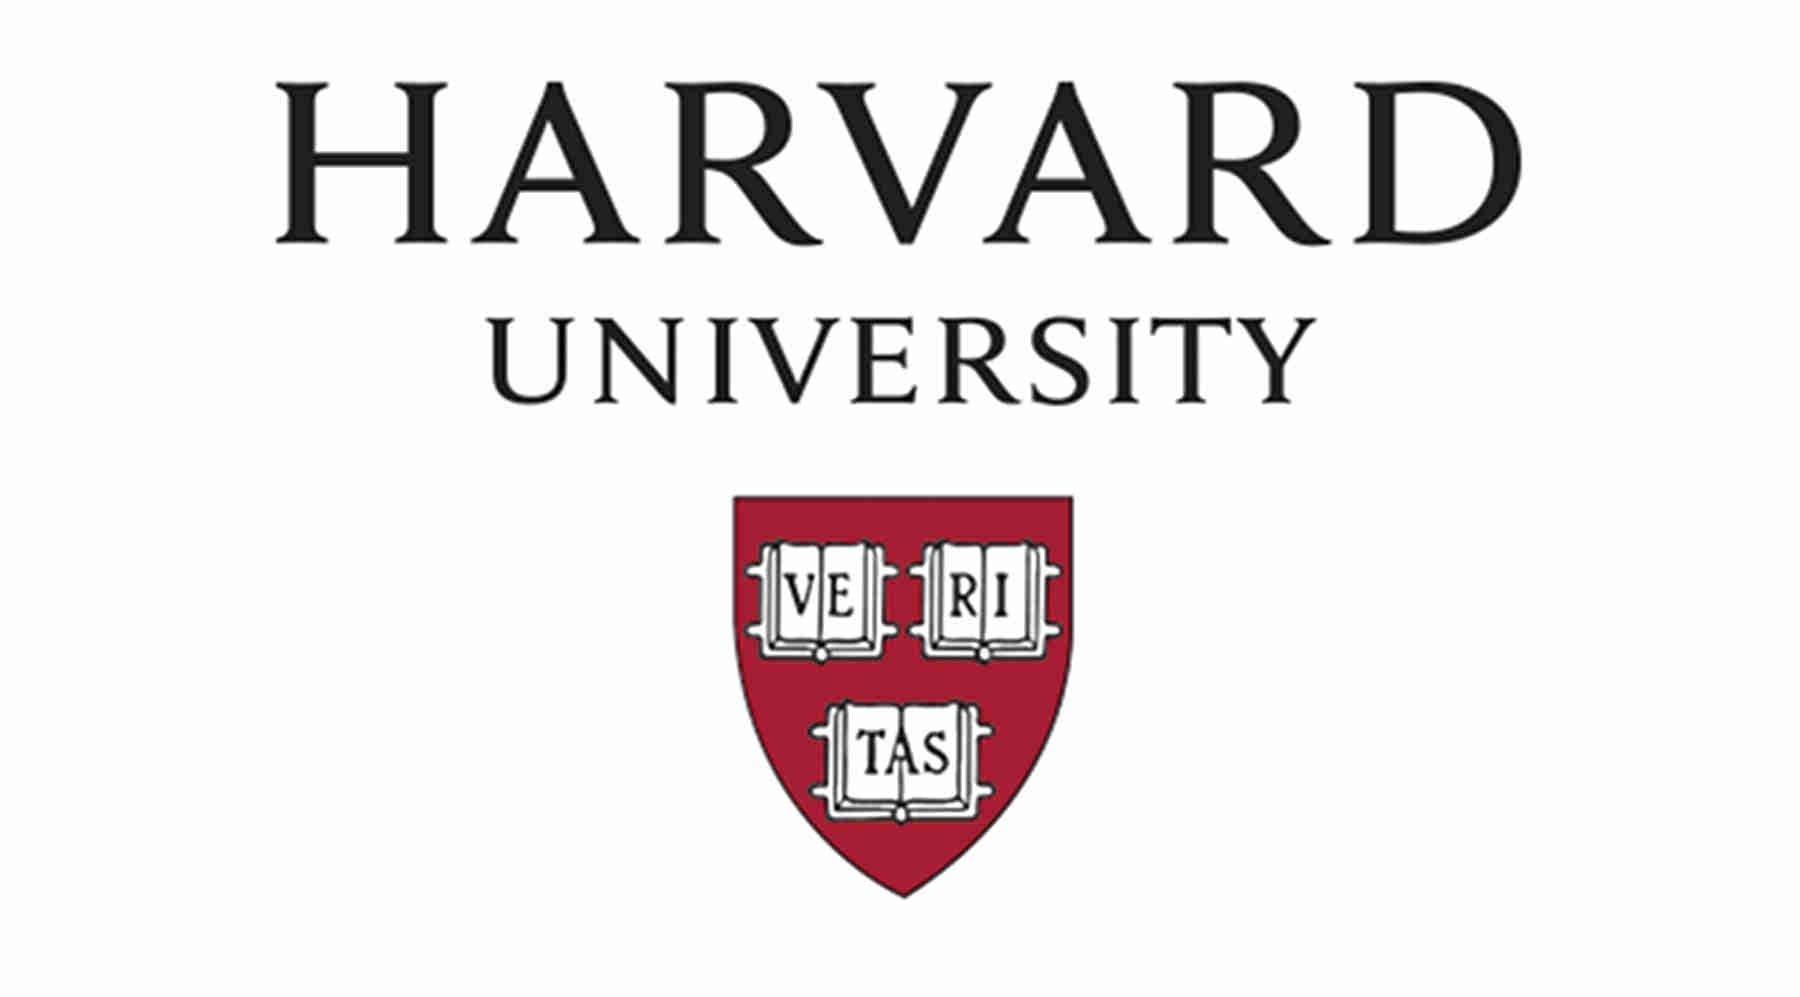 Harvard University Wallpapers